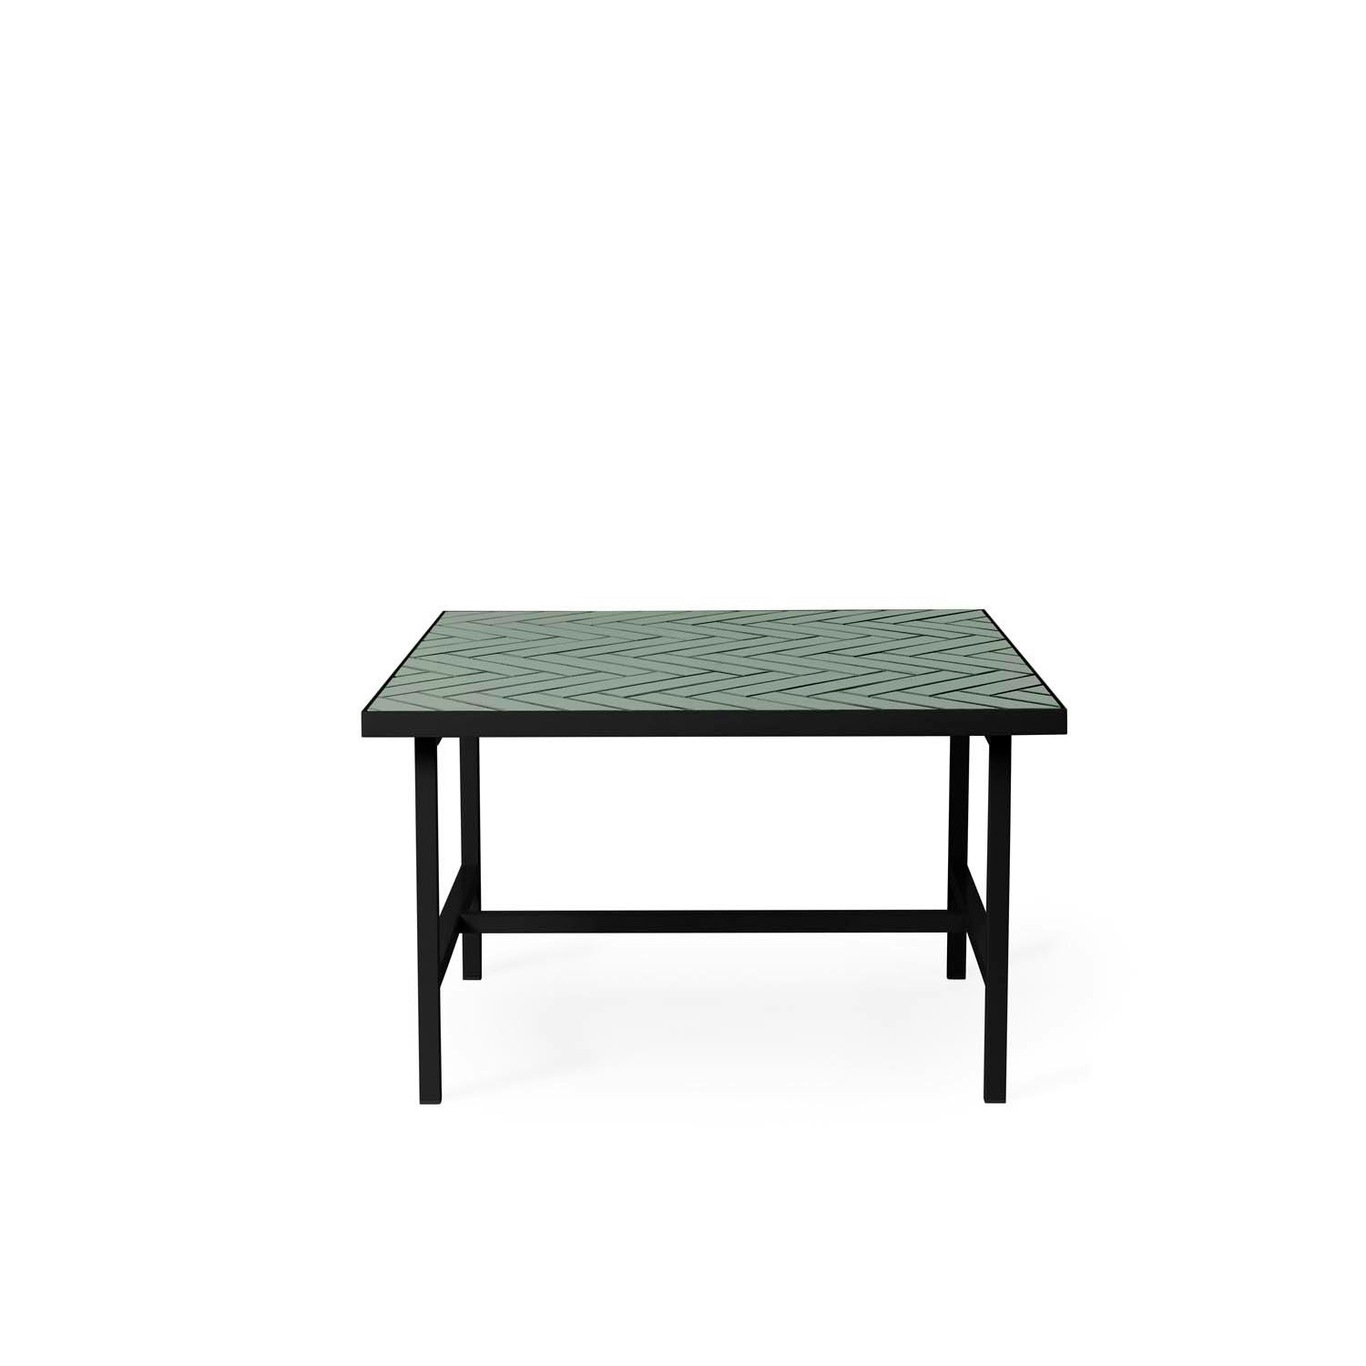 Herringbone Tile Coffee Table, Forest green